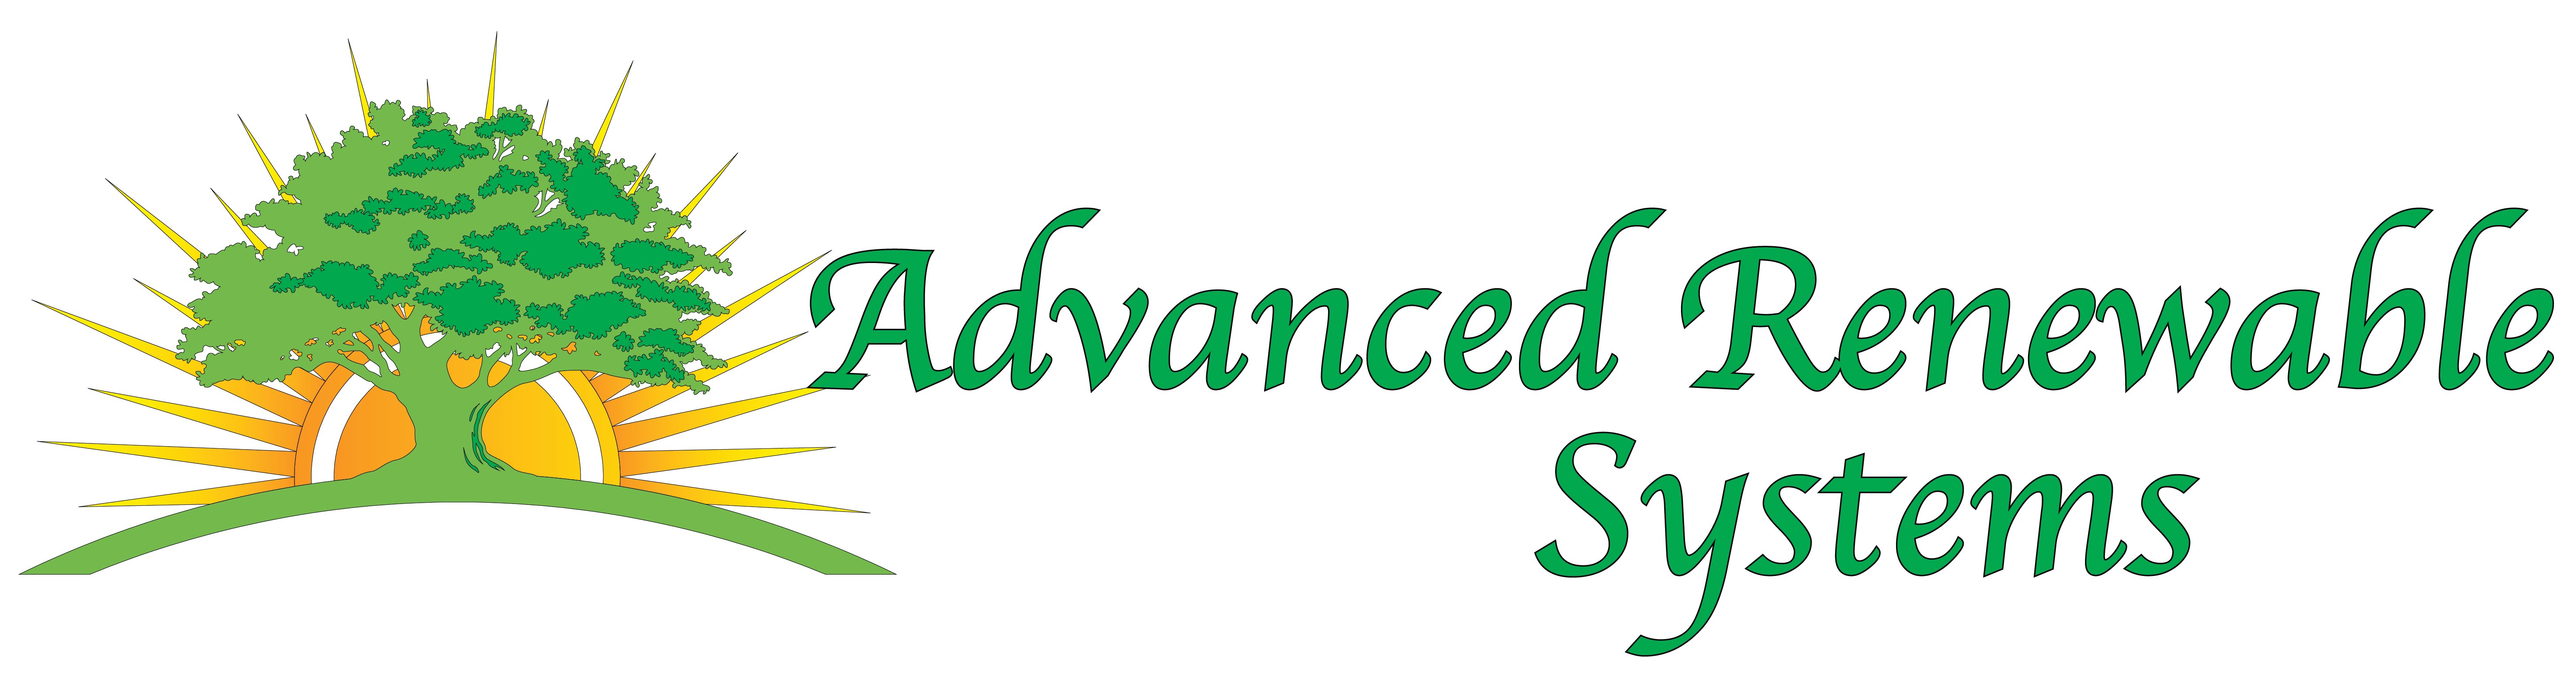 Advanced Renewable Systems / ARS Solar logo